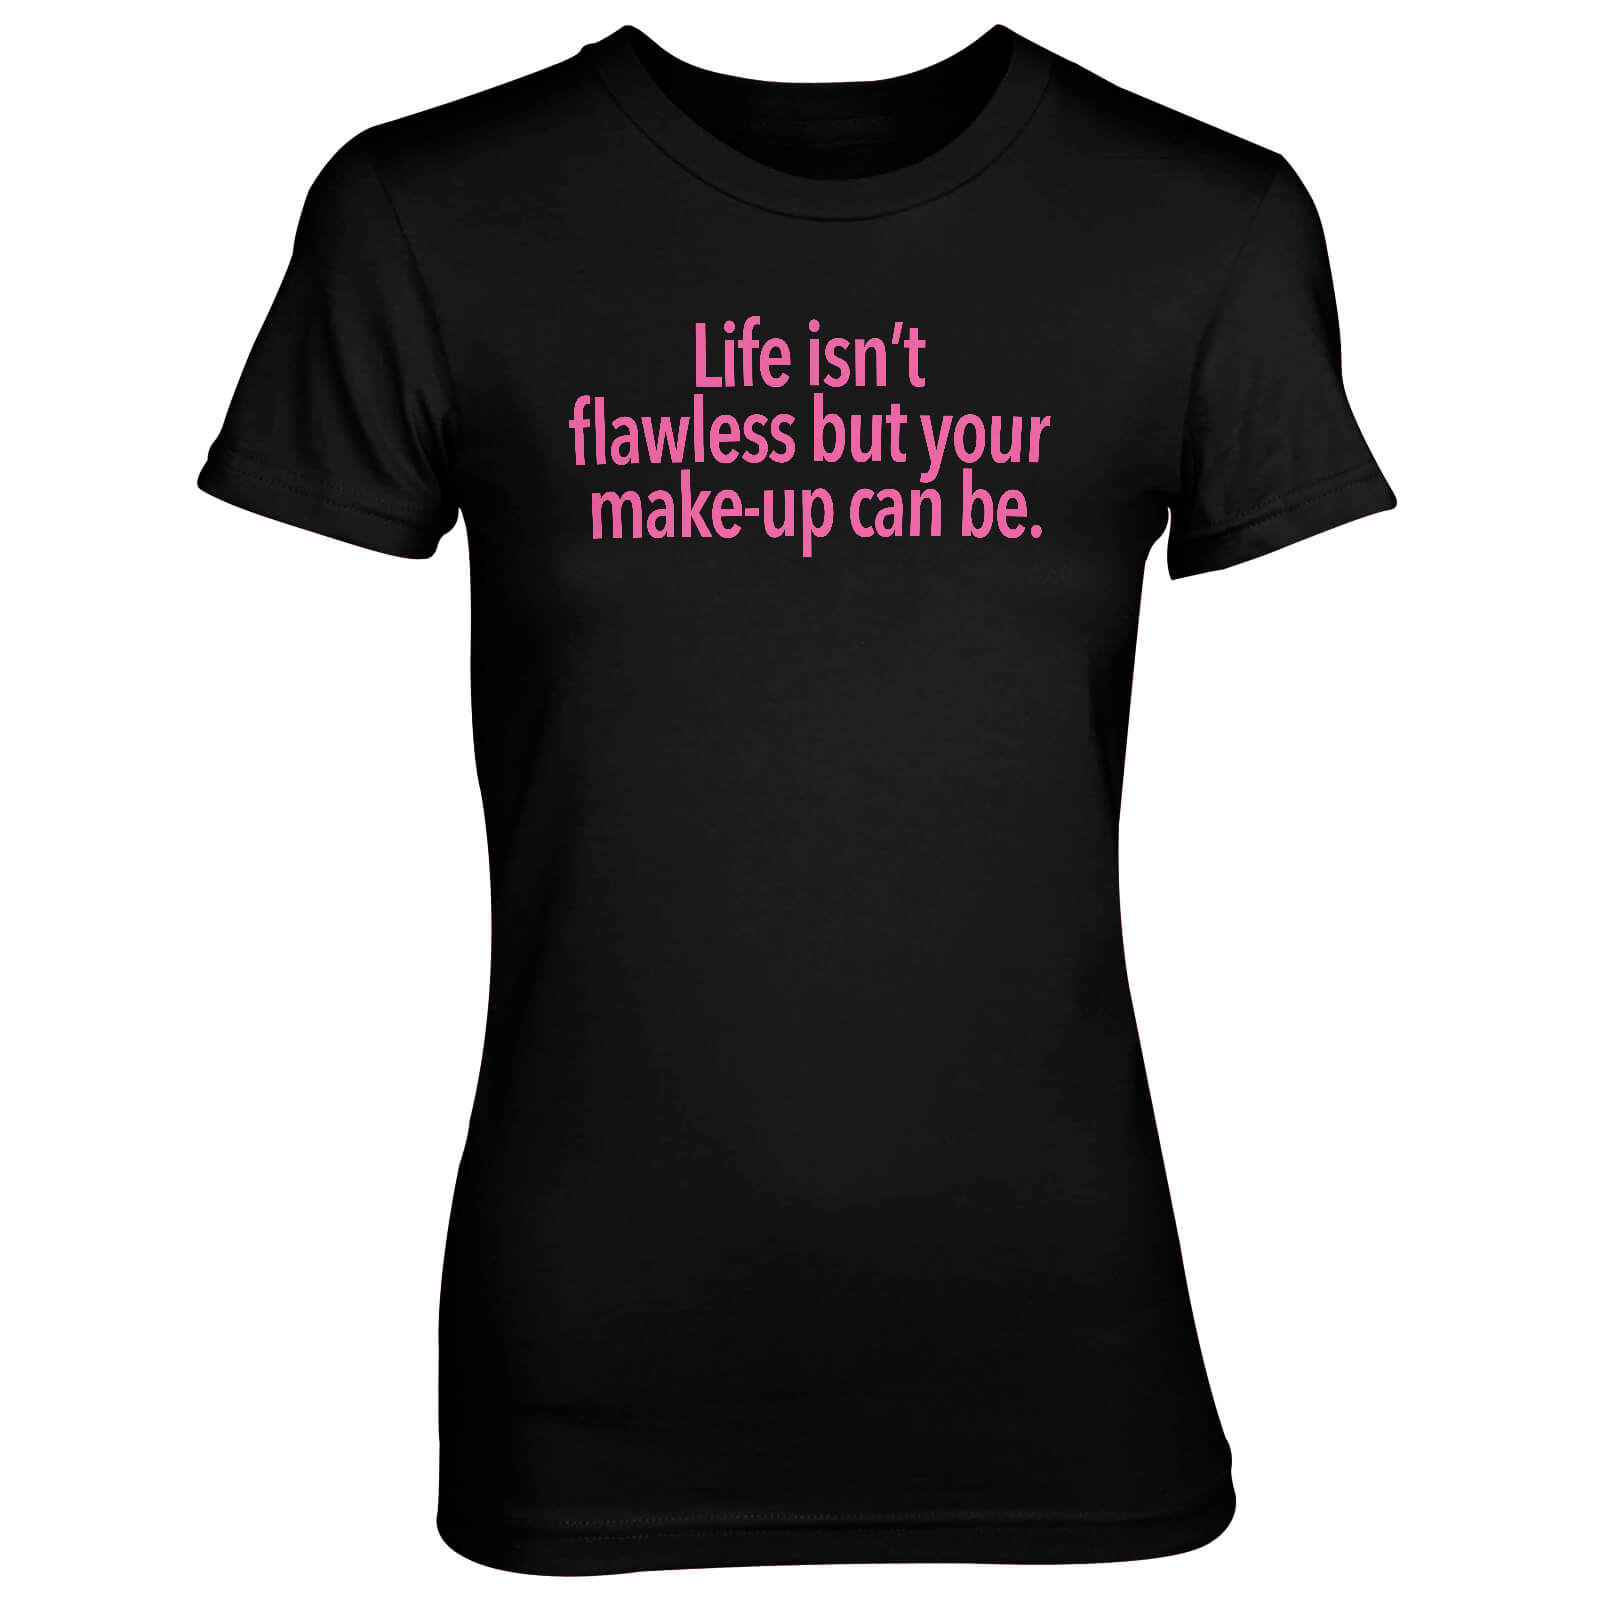 Life Isn't Flawless Women's Black T-Shirt - S - Black